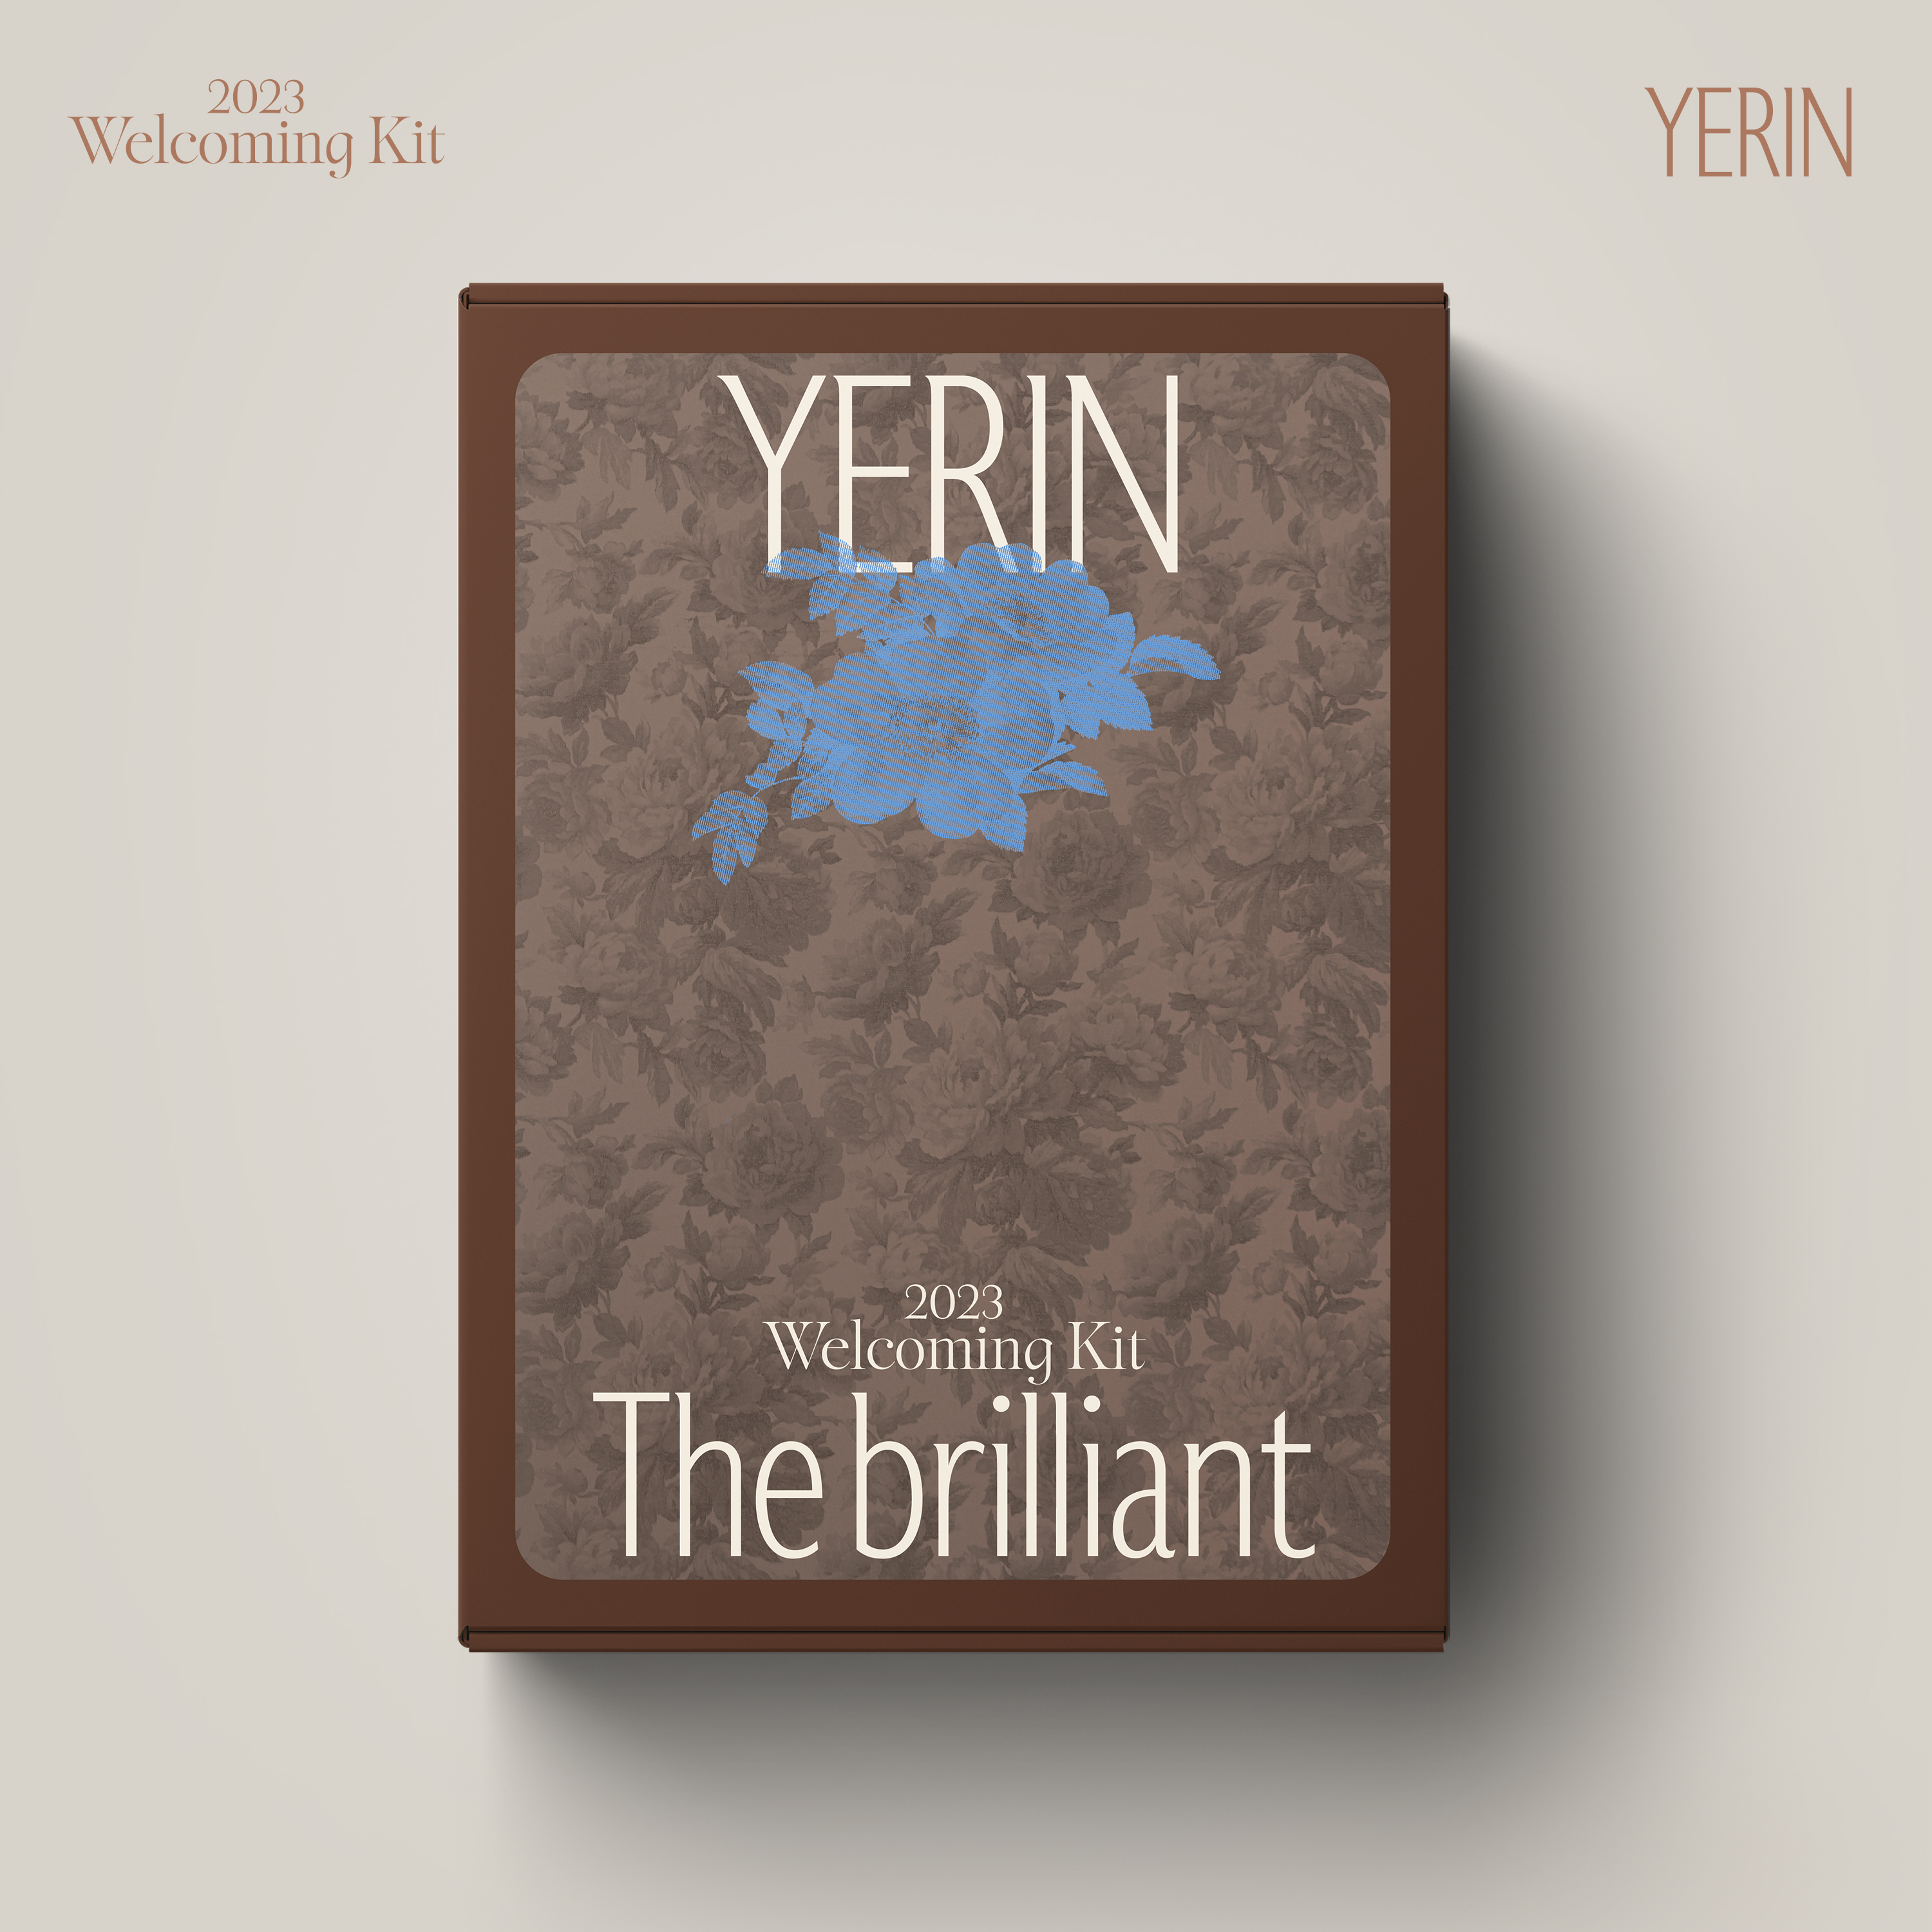 [全款] [视频签售活动] YERIN - 2023 WELCOMING KIT [The brilliant]_Yerin郑艺琳吧